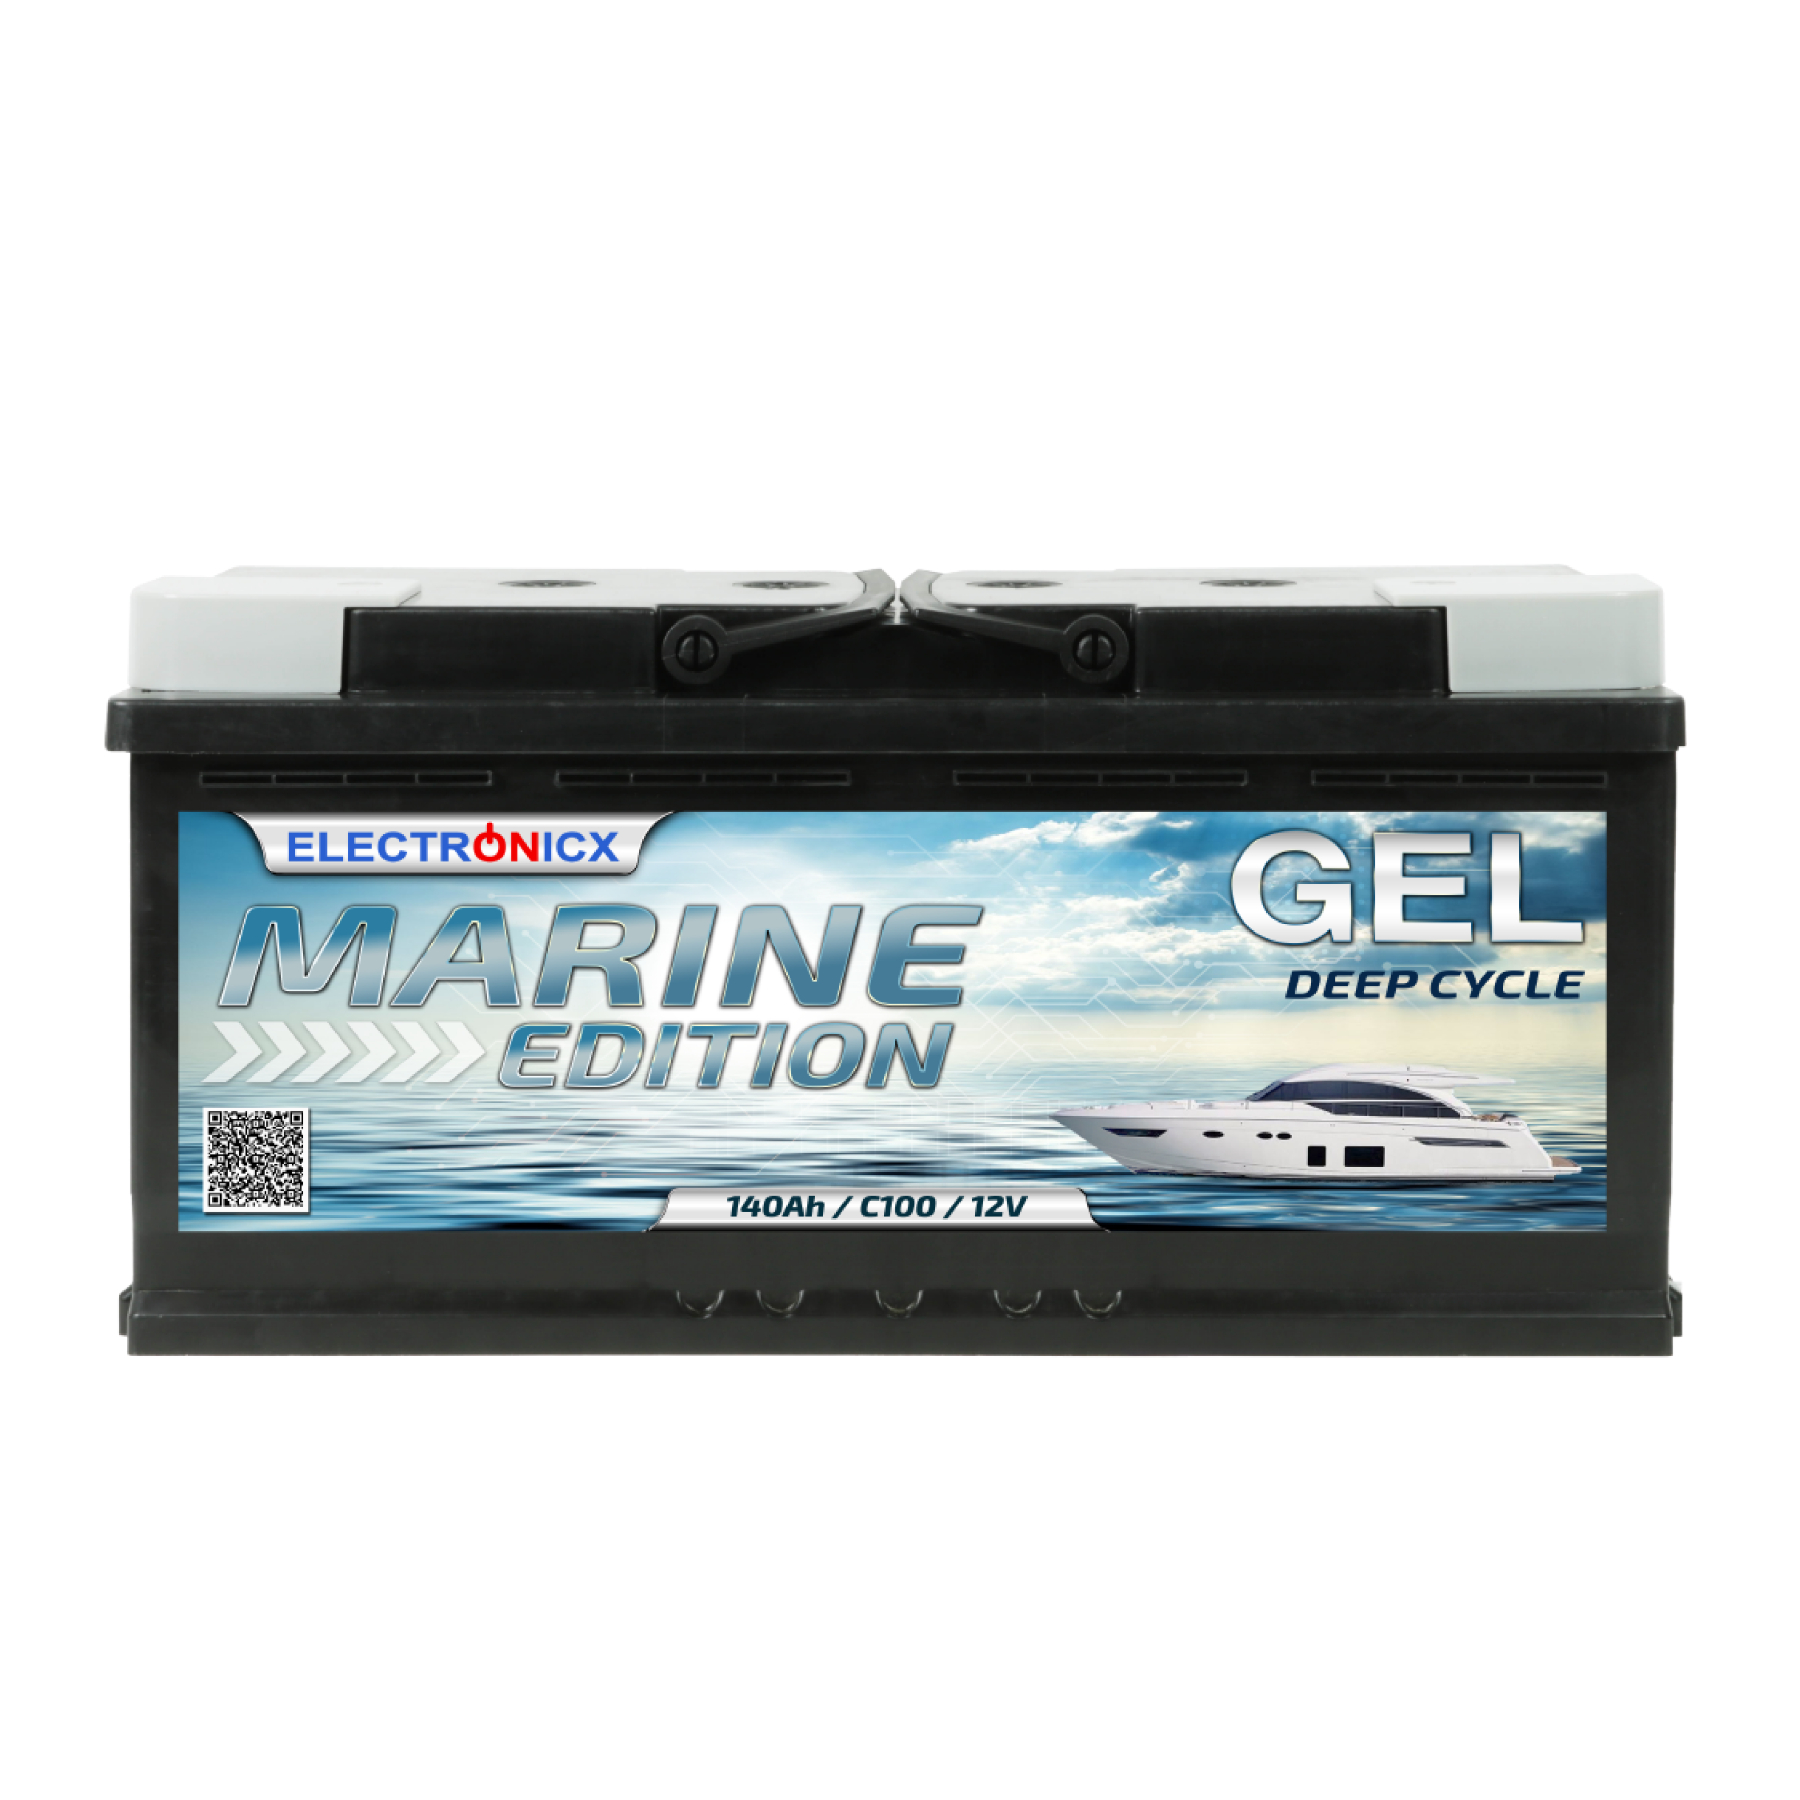 GEL Batterie 140AH Electronicx Marine Edition, 189,99 €